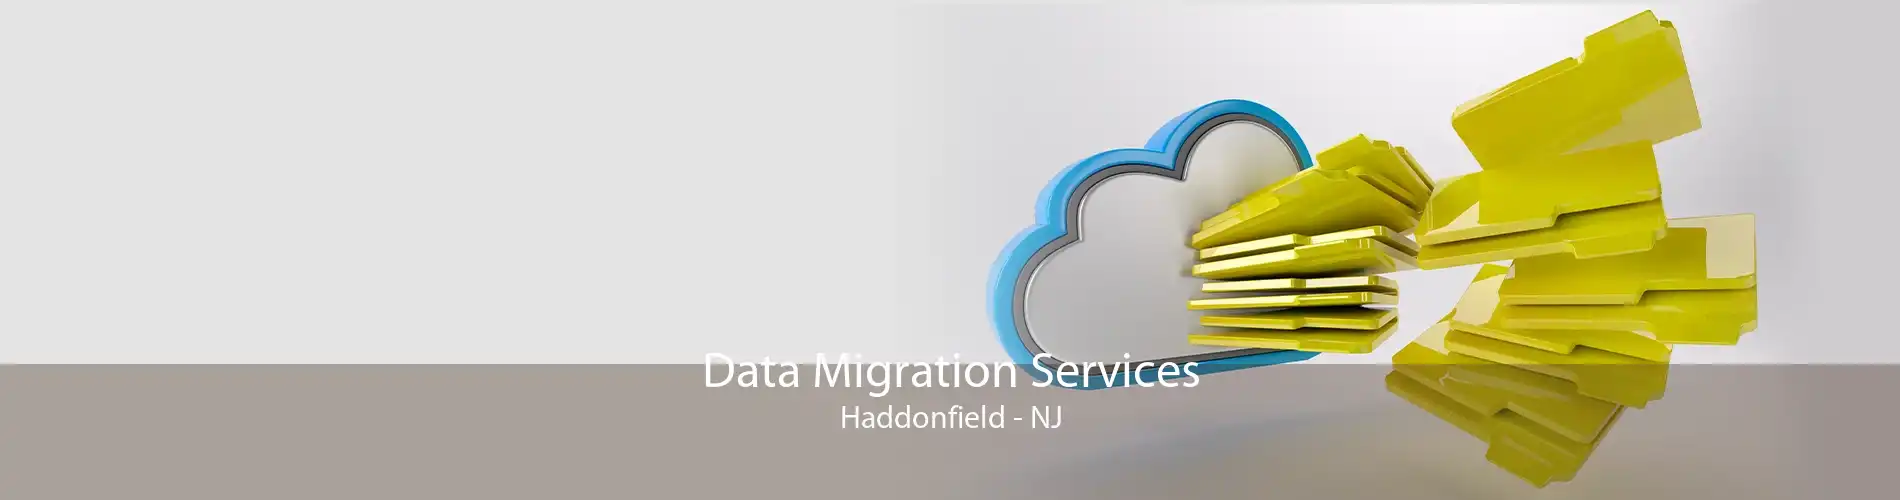 Data Migration Services Haddonfield - NJ